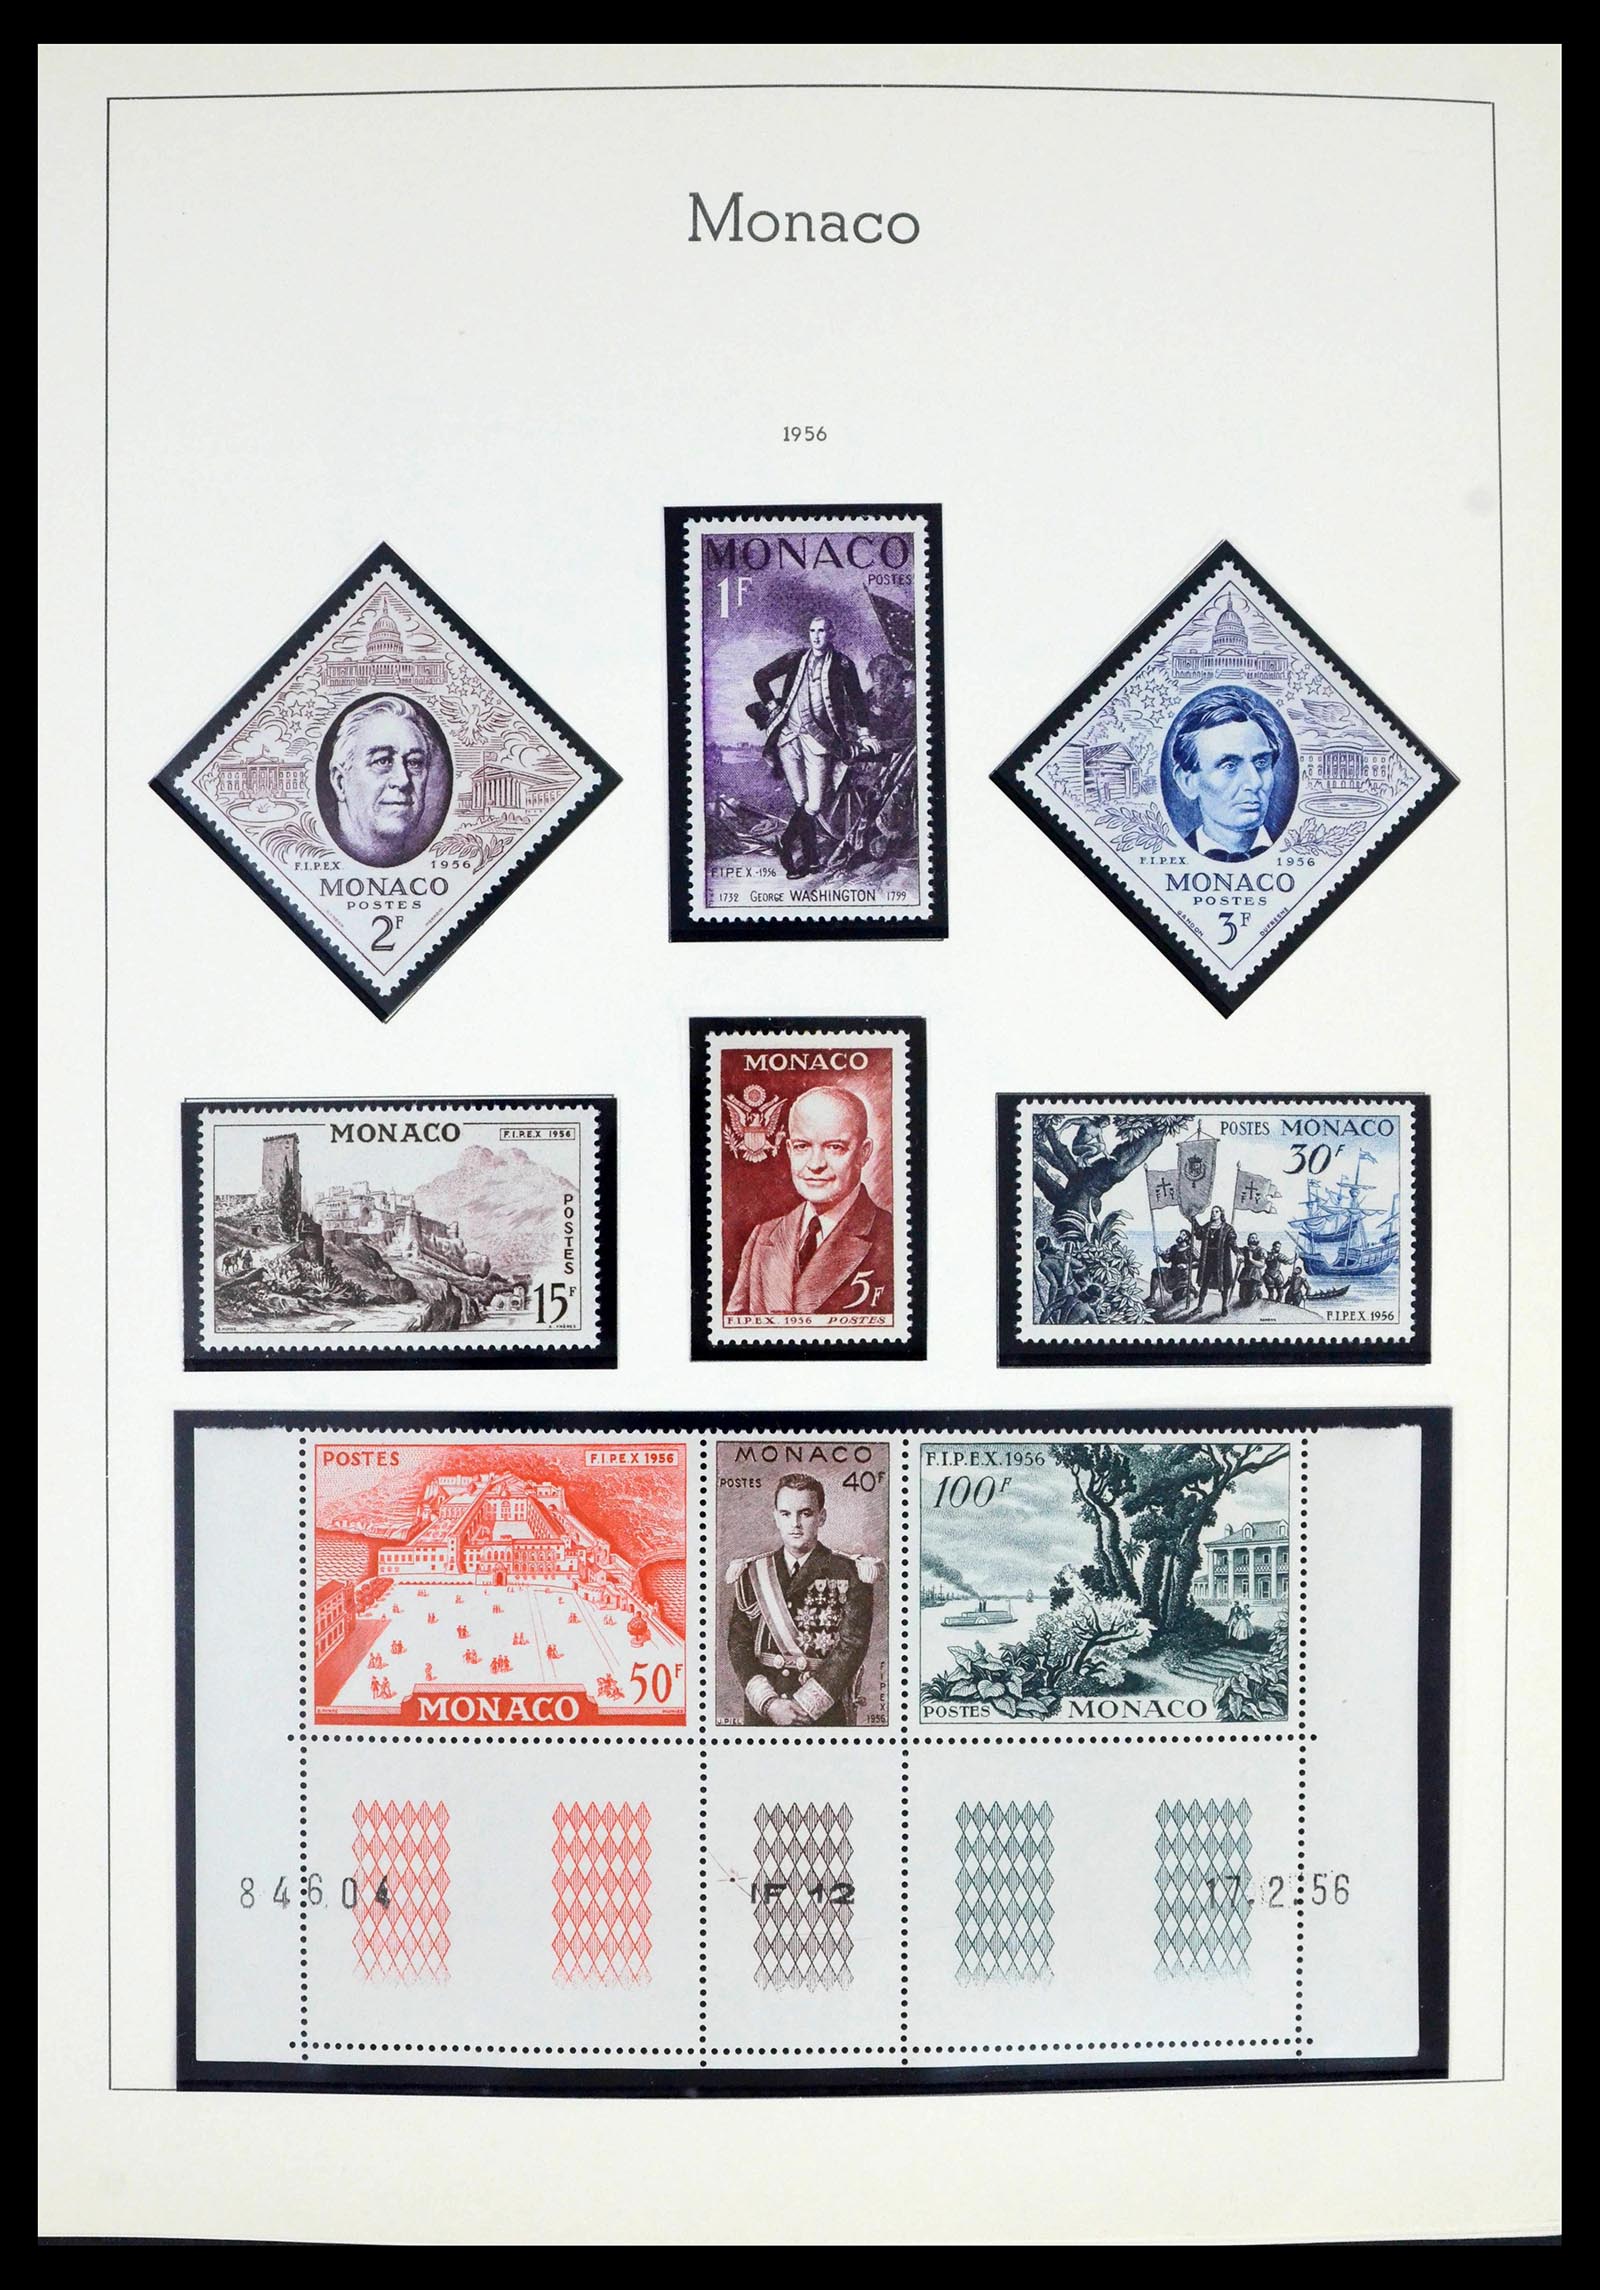 39392 0054 - Stamp collection 39392 Monaco 1885-1999.